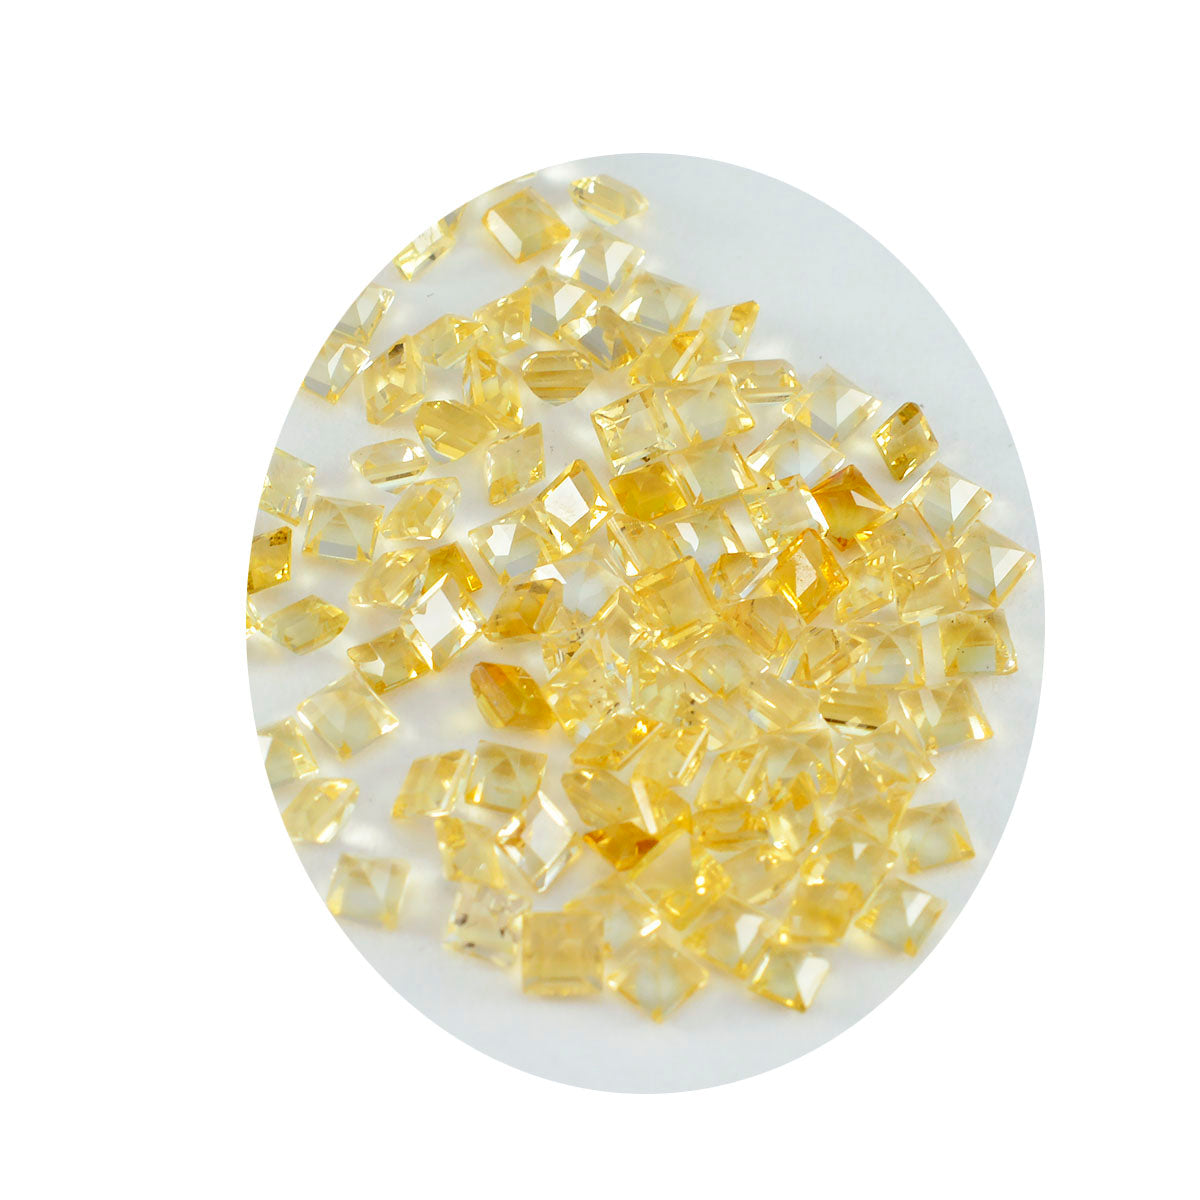 Riyogems 1PC Genuine Yellow Citrine Faceted 5x5 mm Square Shape beautiful Quality Stone